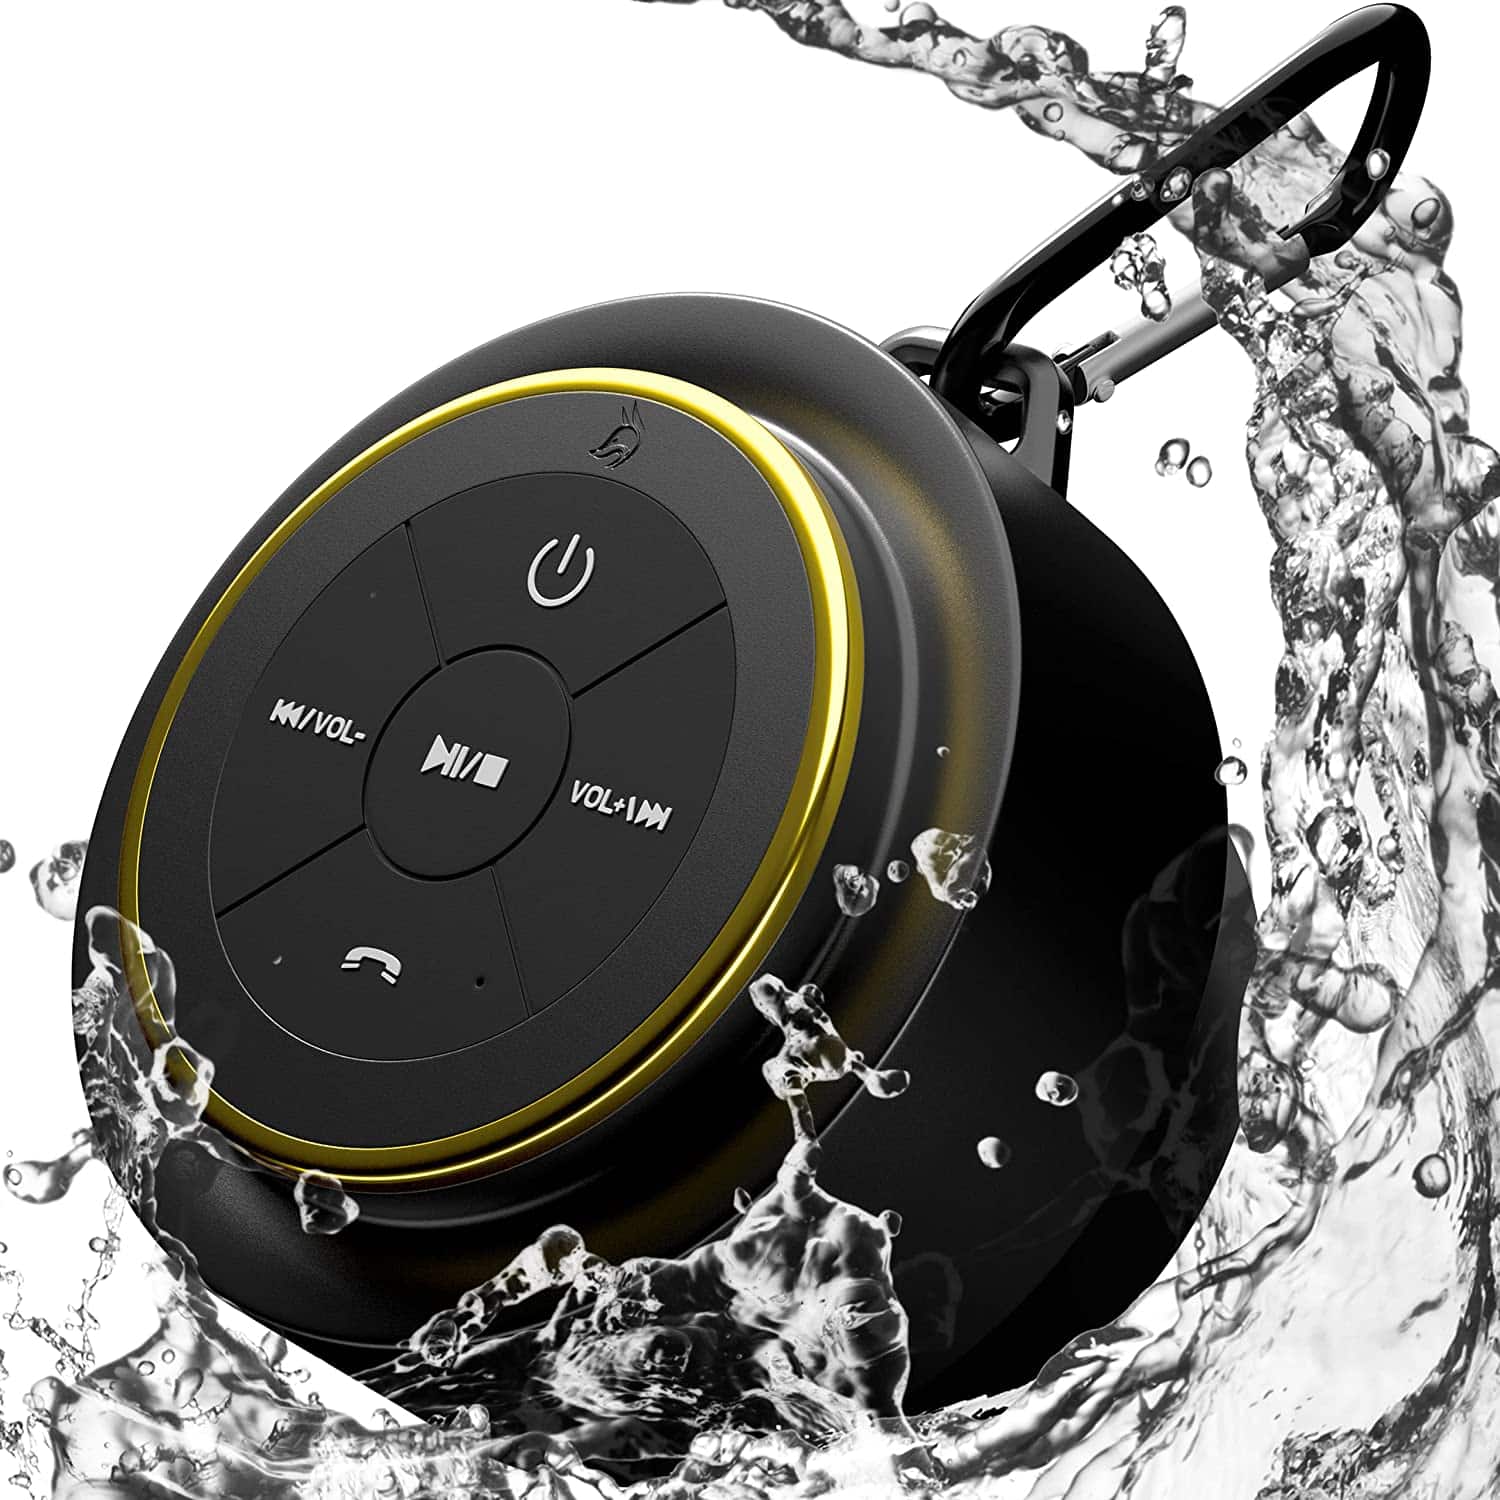 Portable Bluetooth shower speaker 